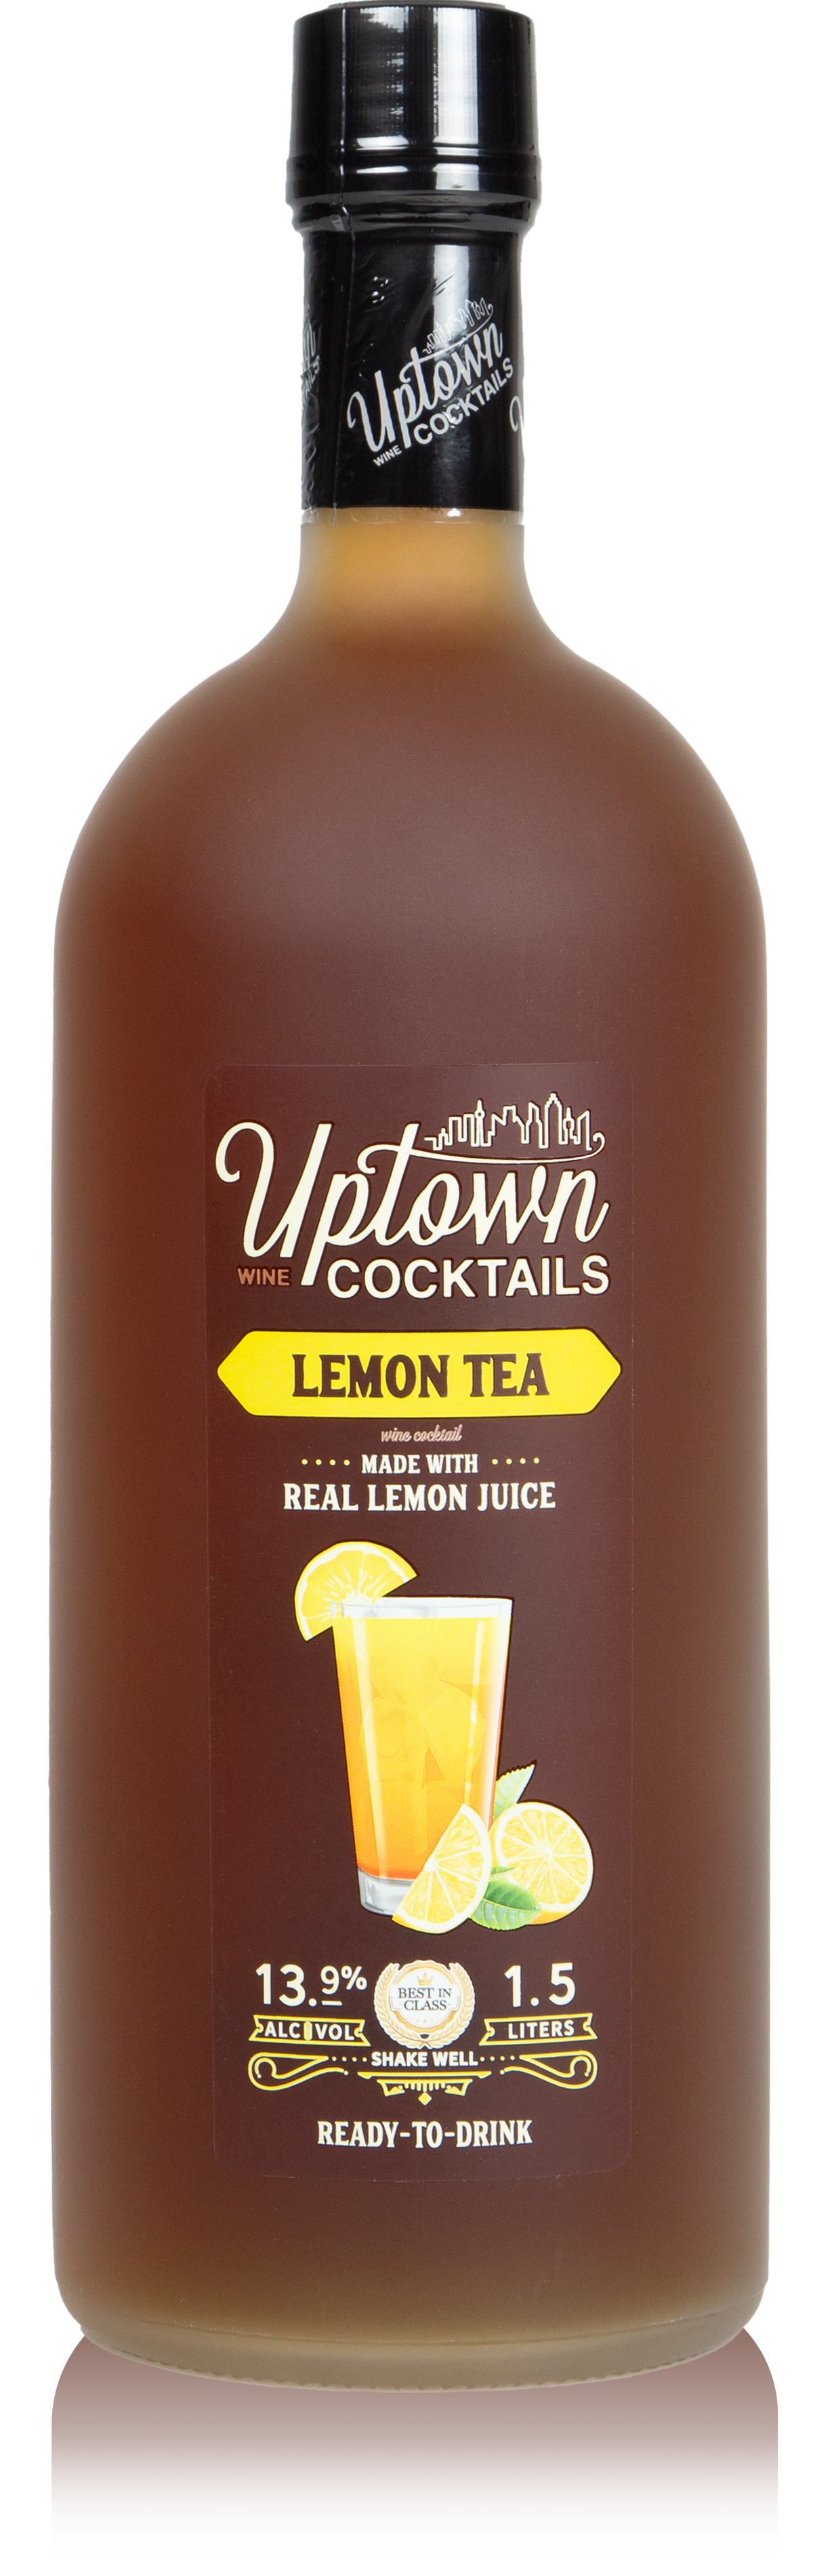 Product Image for Lemon Tea